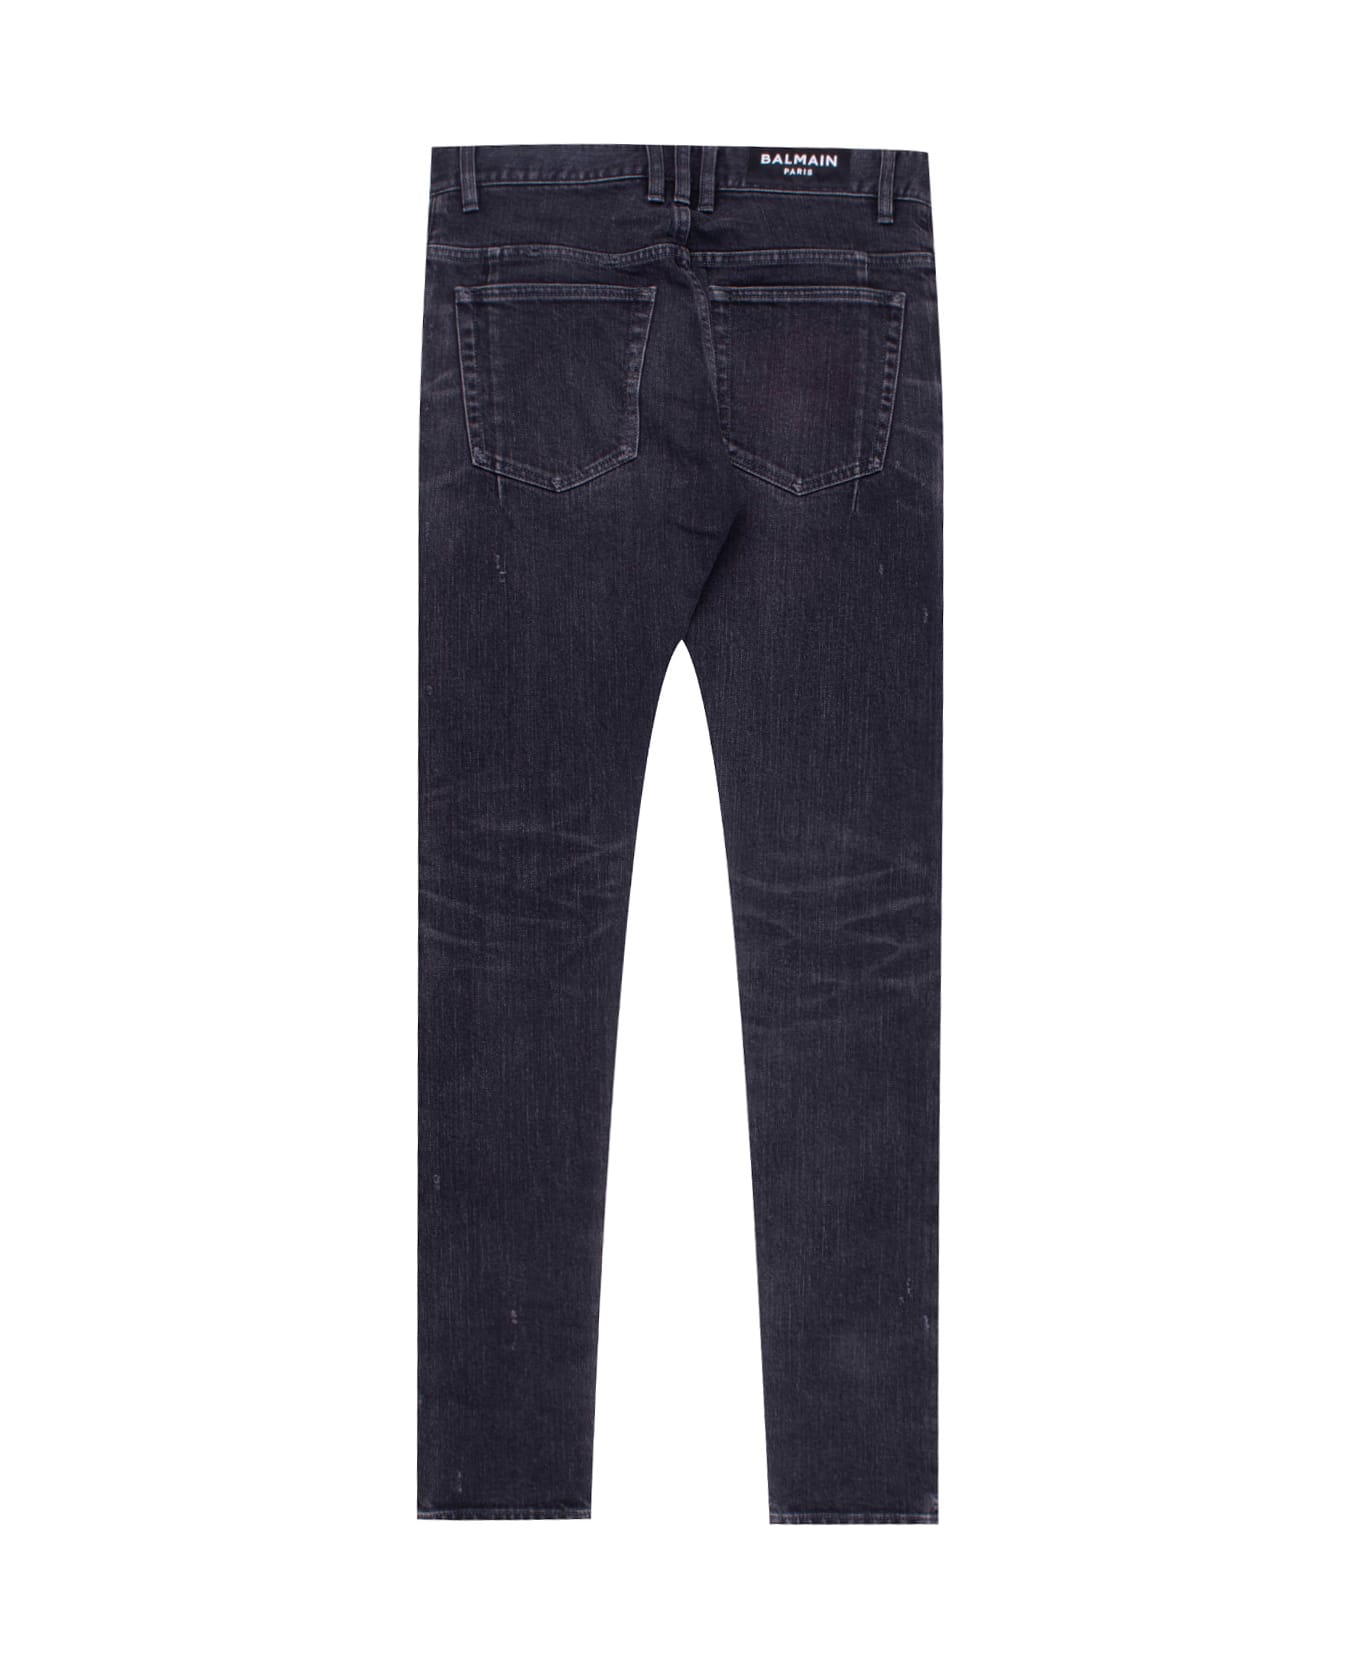 Balmain Cotton Jeans - Black デニム